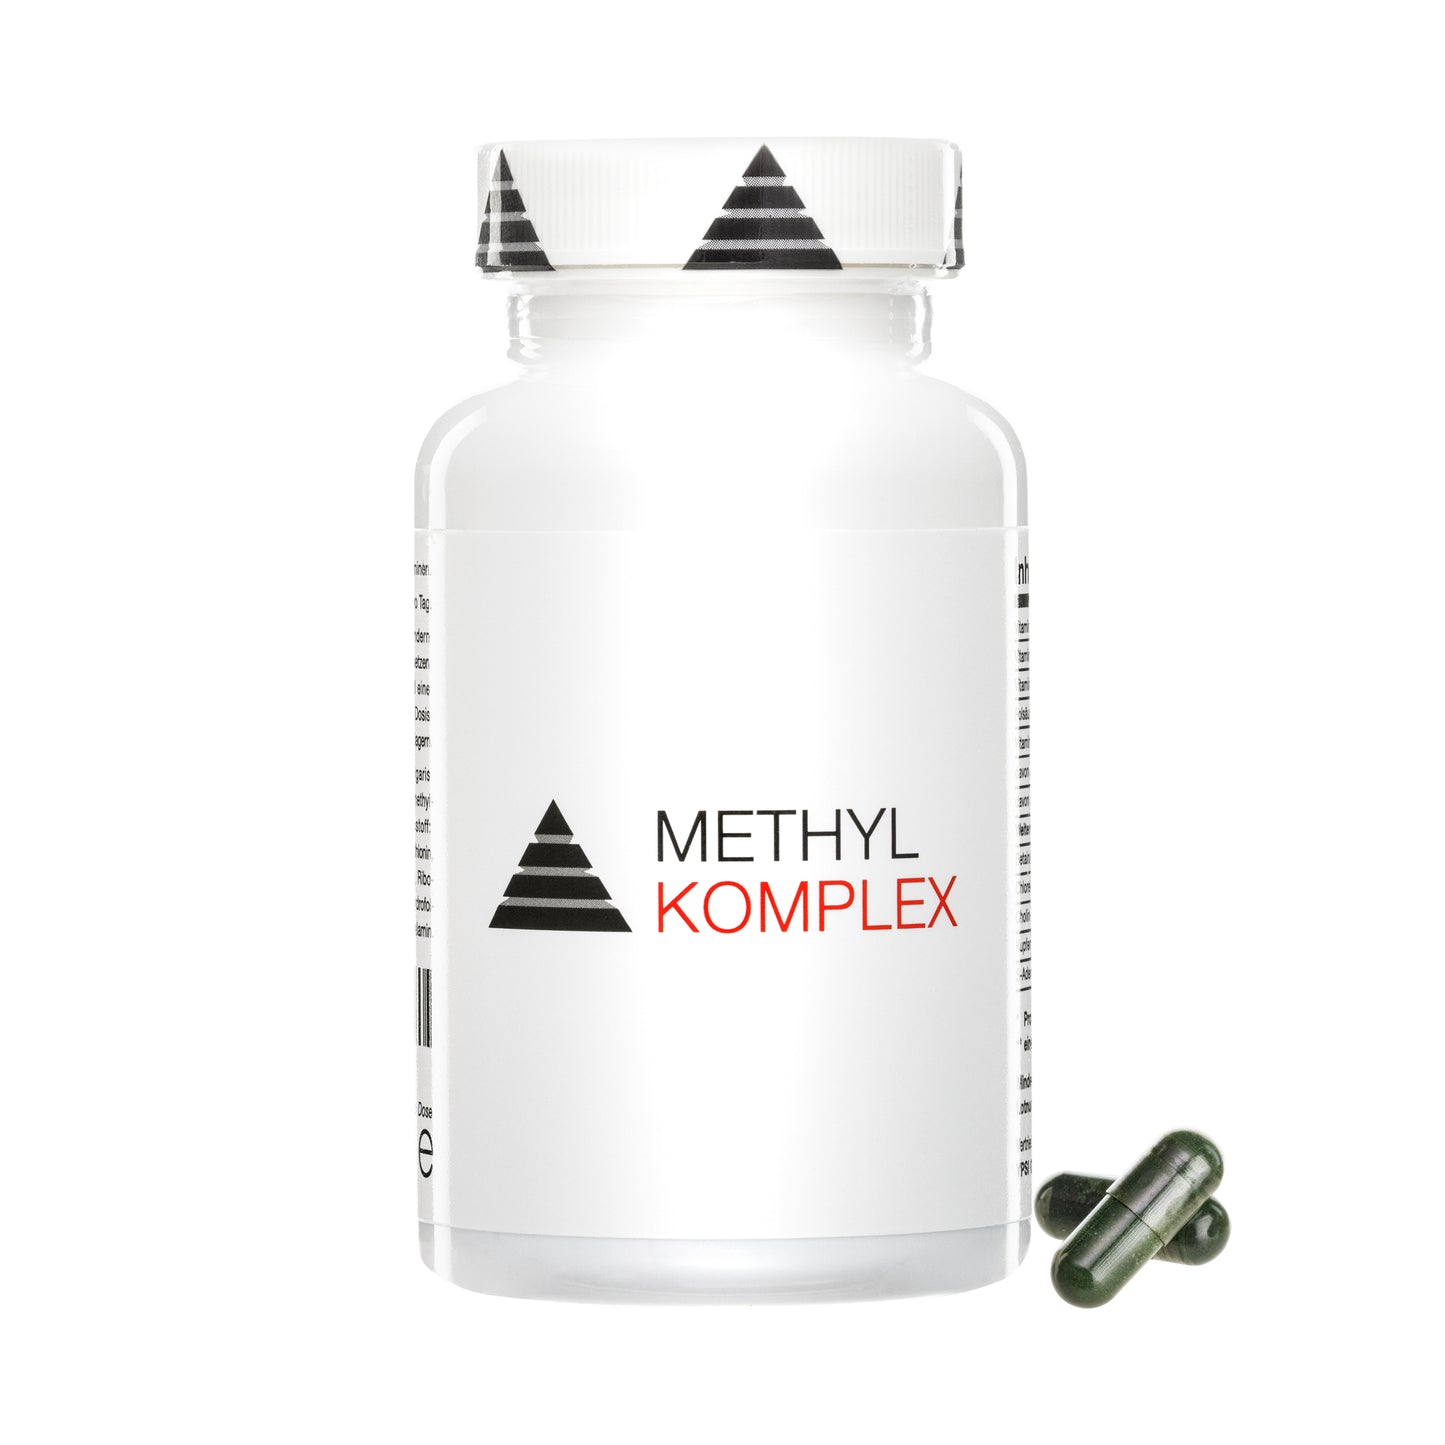 YPSI Methyl Komplex (MHD 1/24)